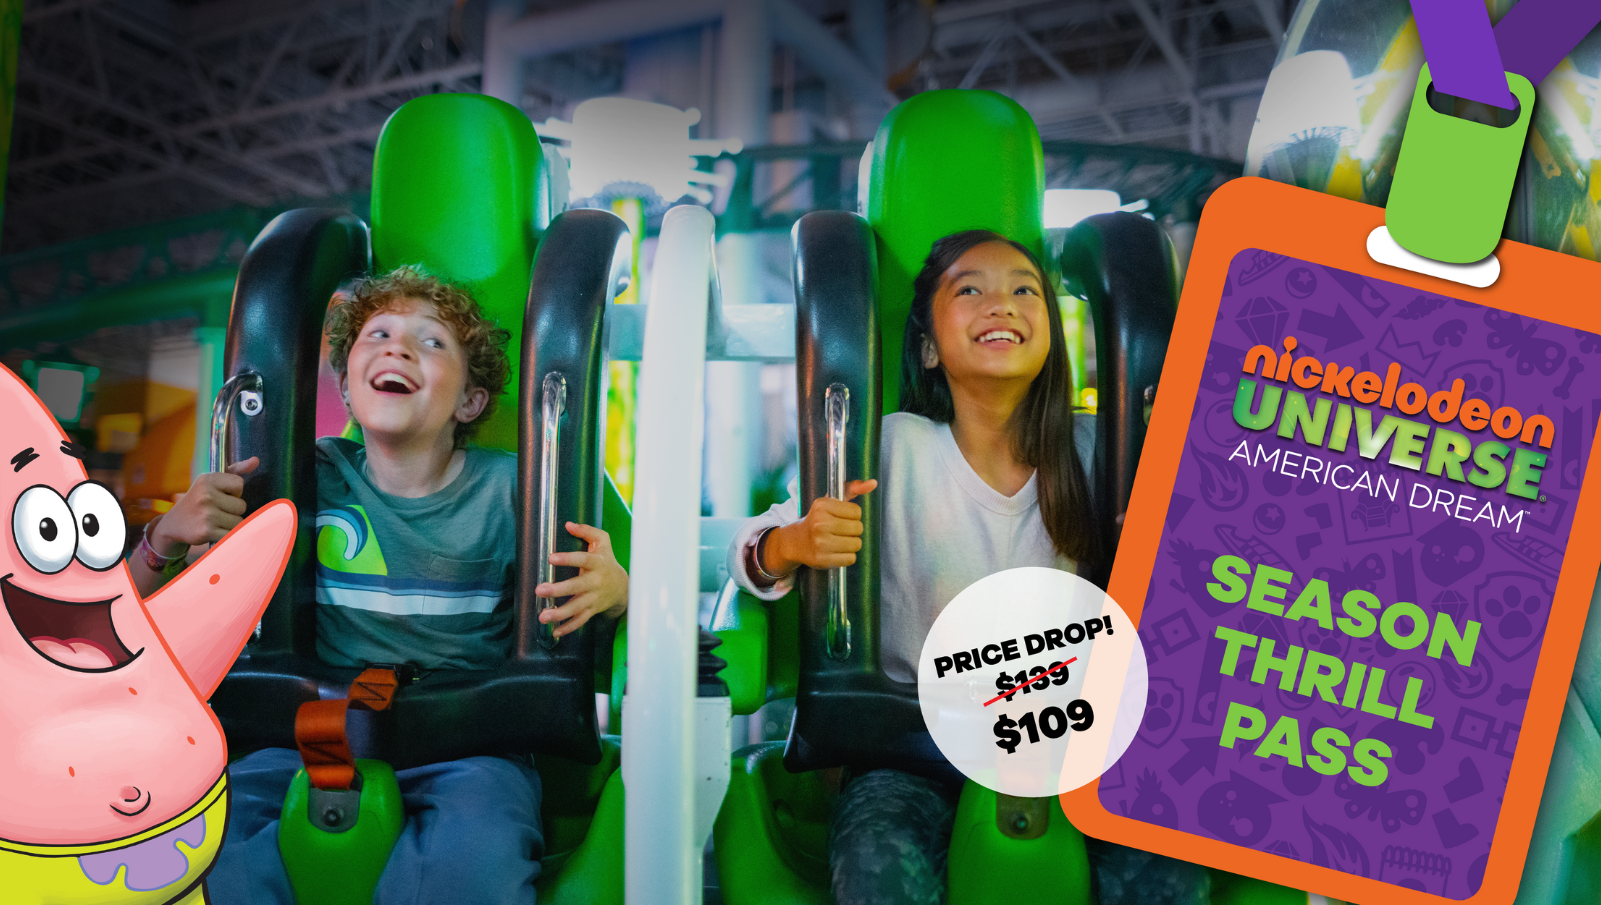 Buy Our Dream Pass Online - Enjoy Both Amusement Parks For $145